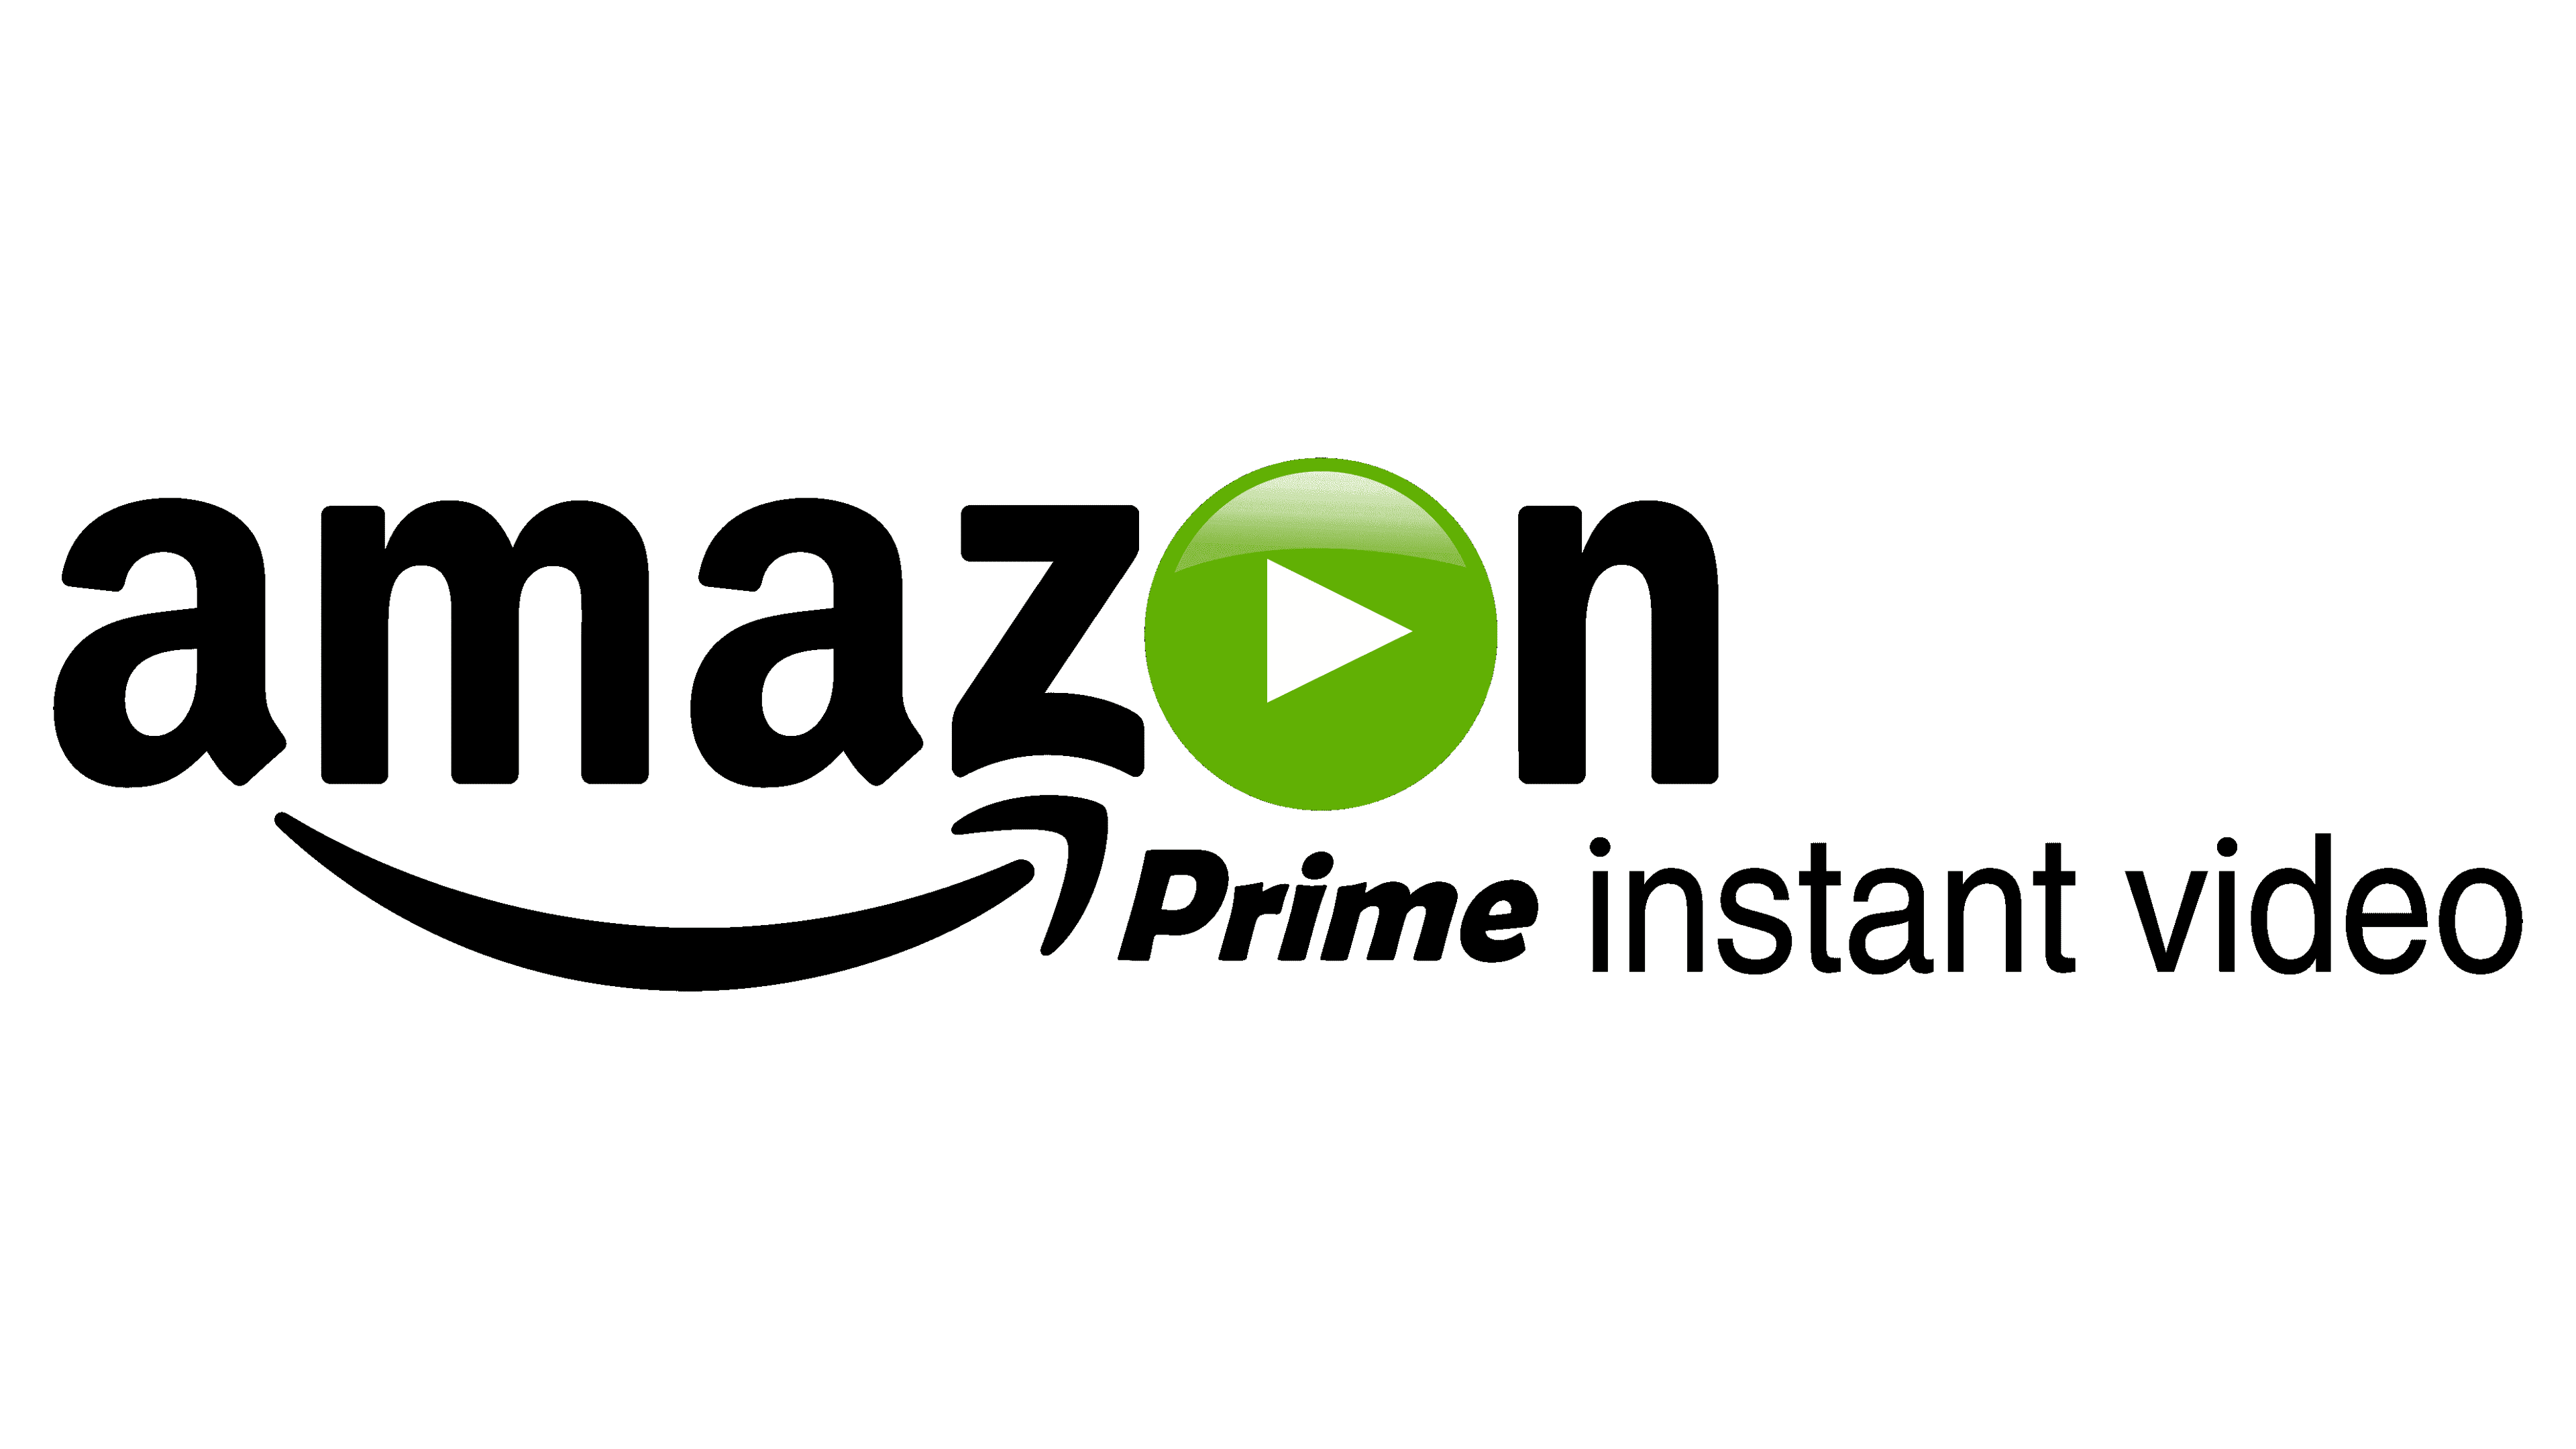 amazon prime music logo